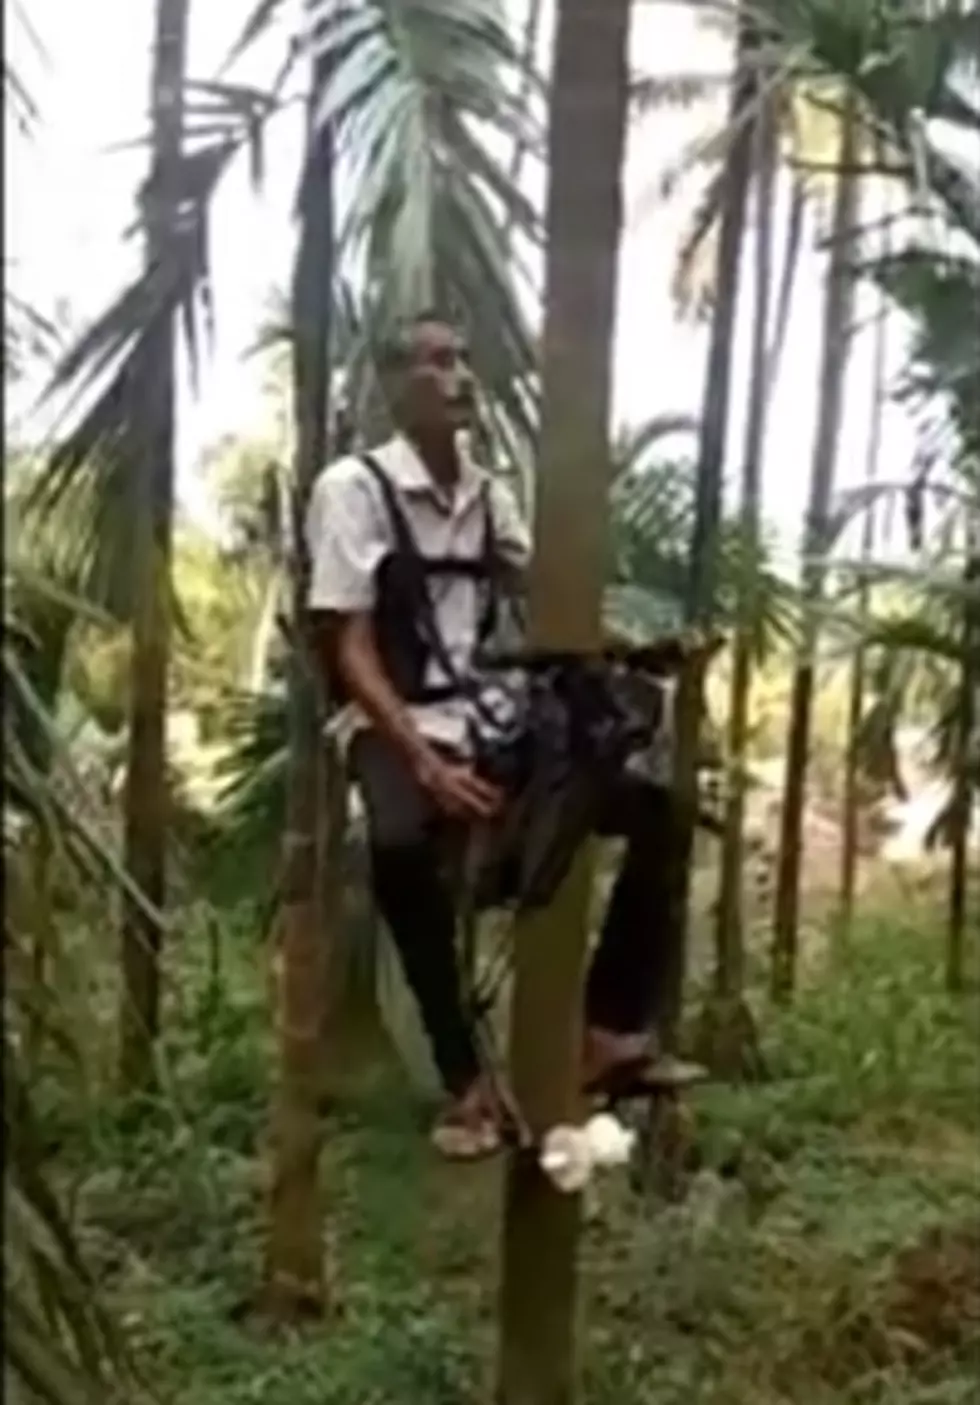 [VIDEO] Man Makes “Tree Bike” To Help Grab Nuts